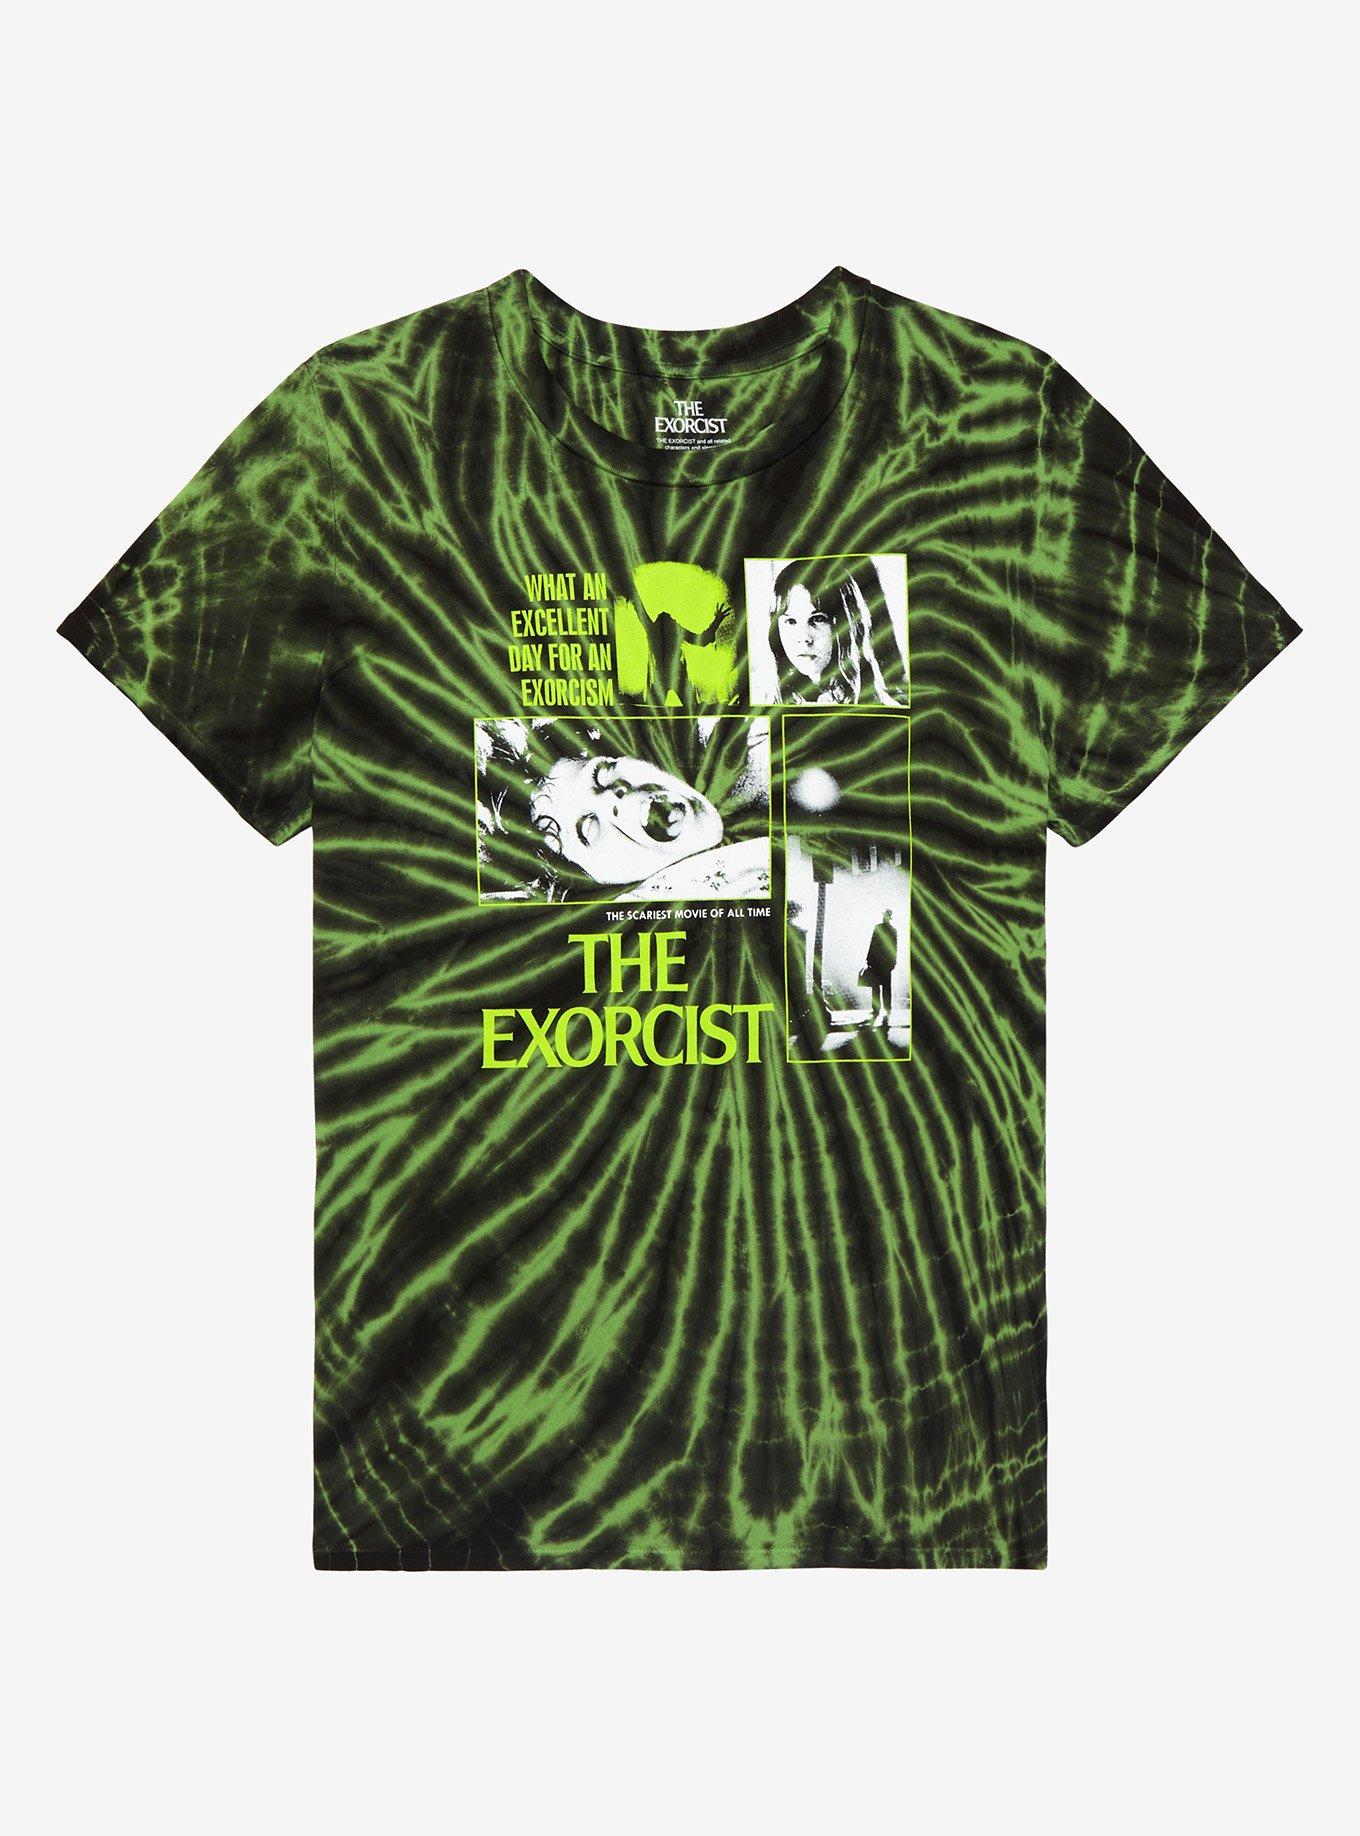 The Exorcist Excellent Day Tie-Dye Boyfriend Fit Girls T-Shirt